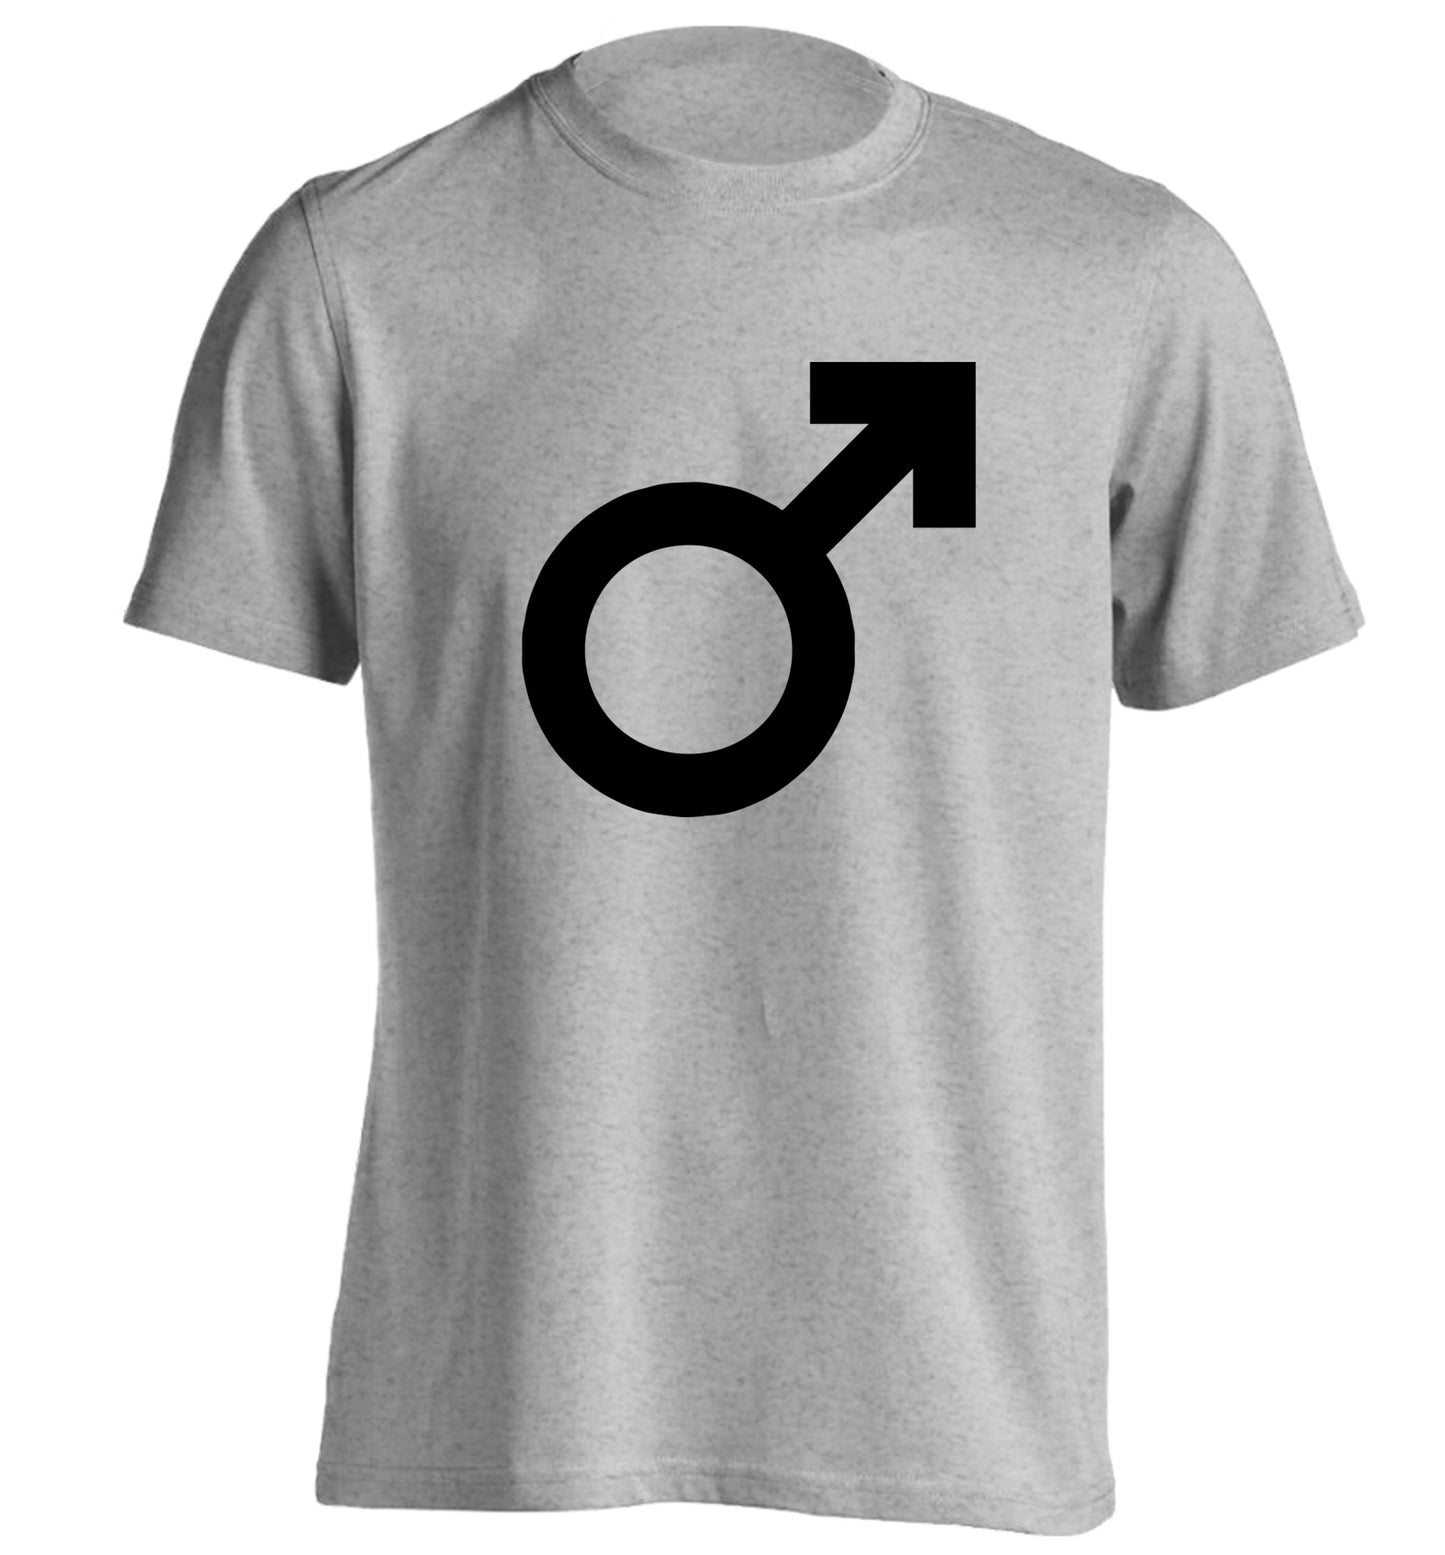 Male symbol large adults unisex grey Tshirt 2XL